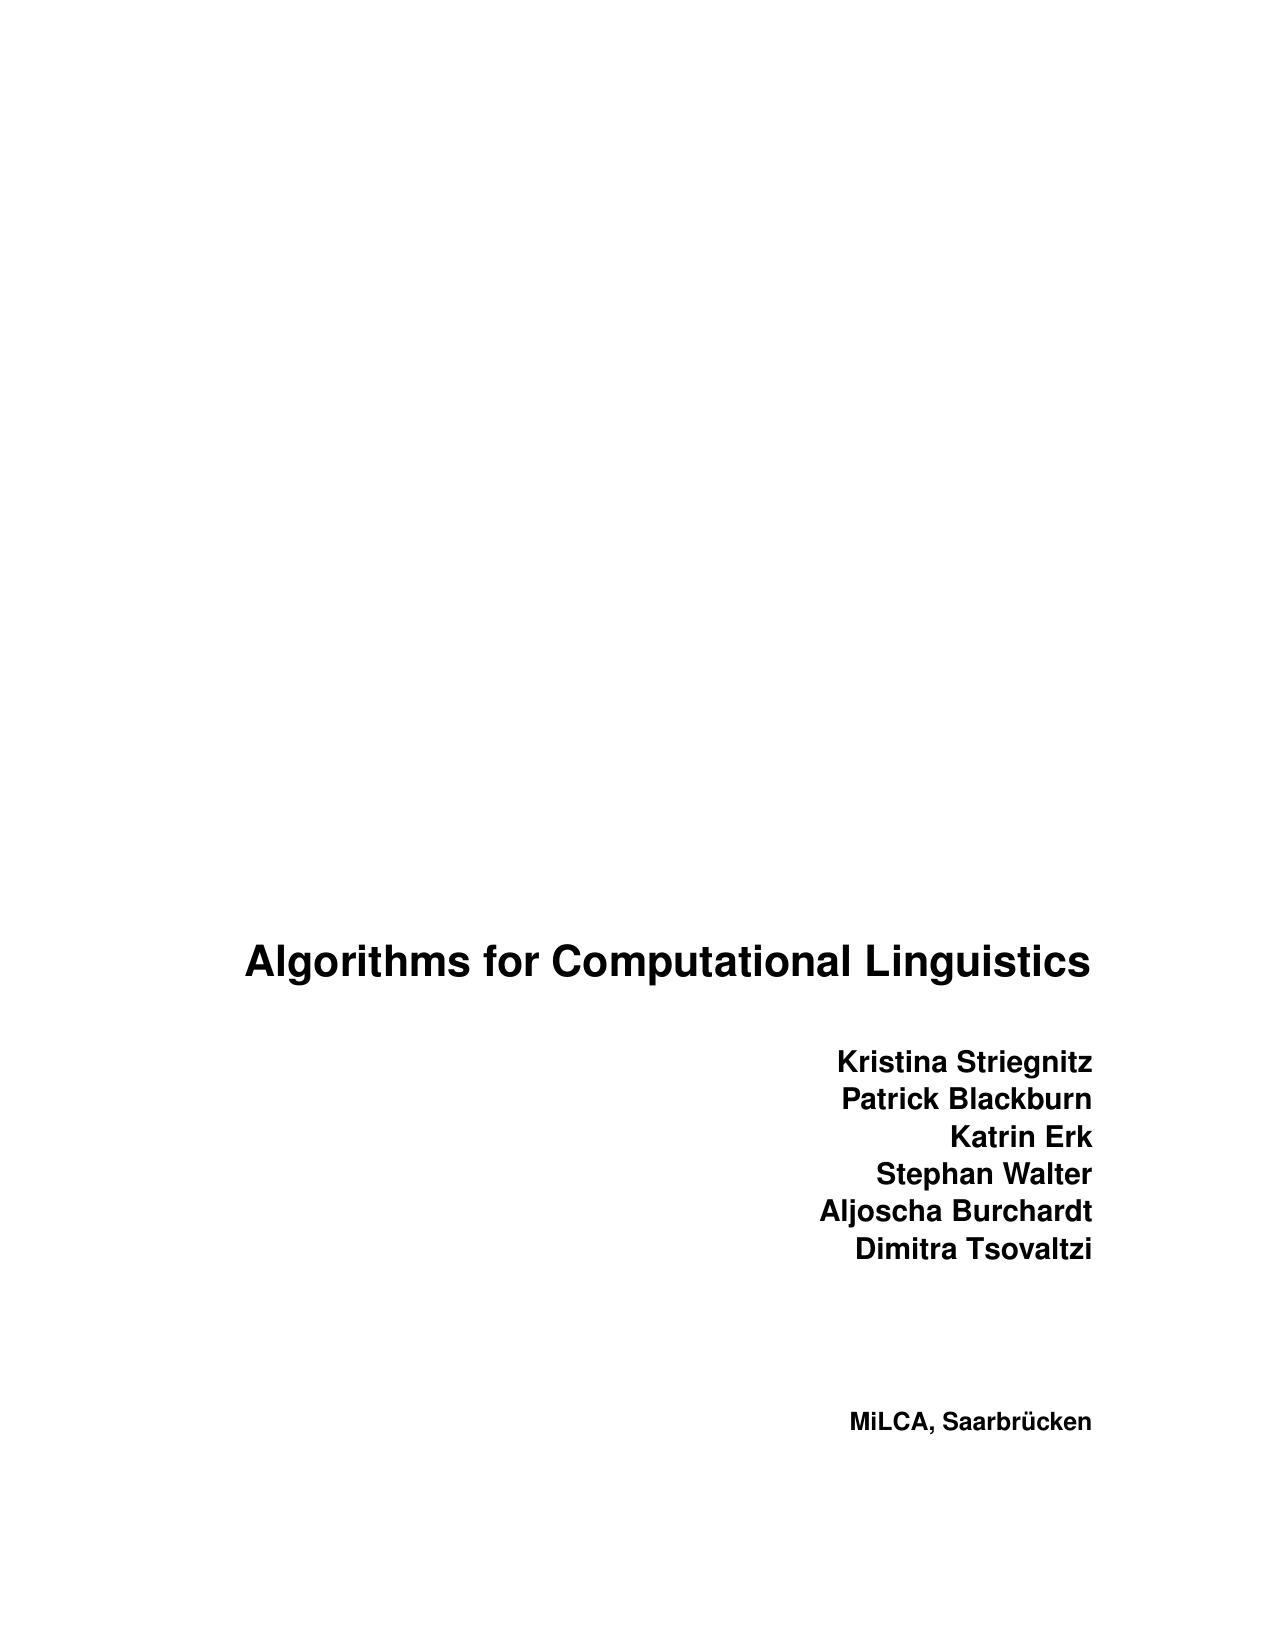 Algorithms for computational linguistics